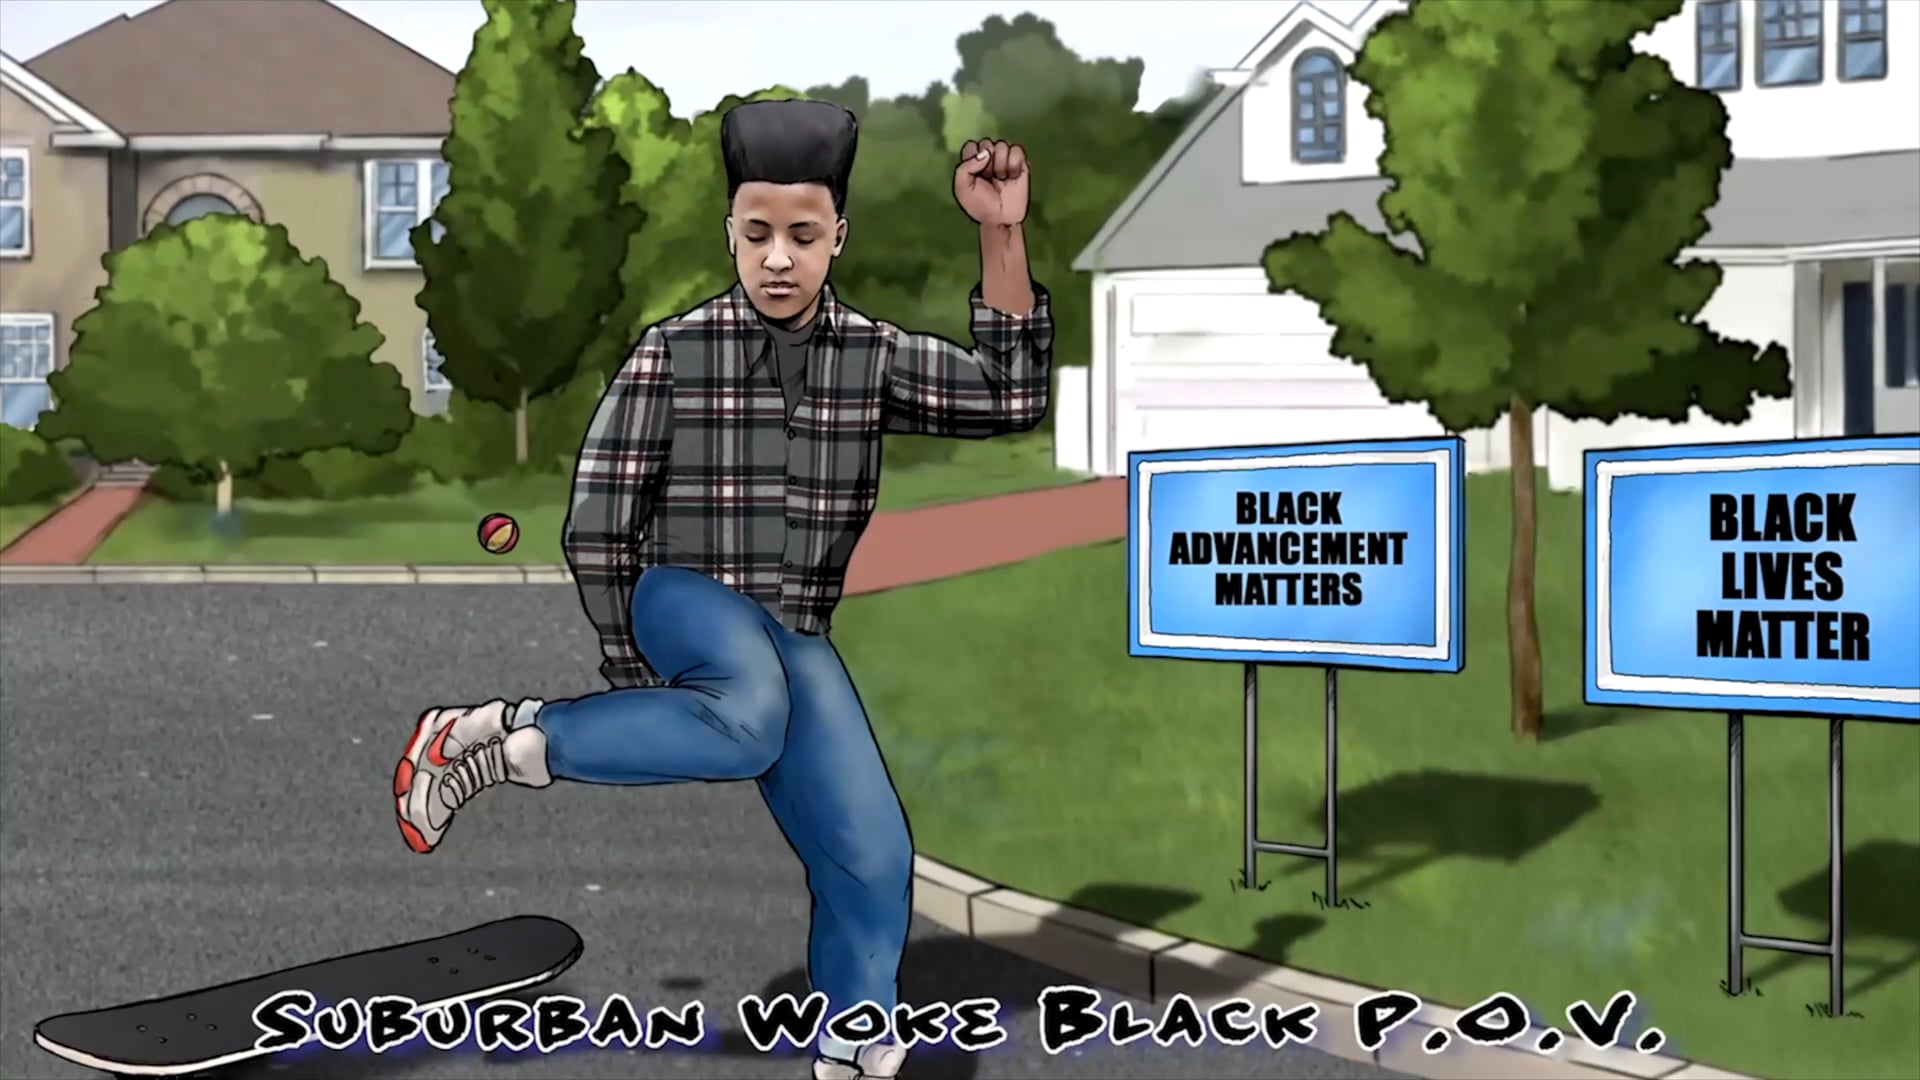 Suburban Woke Black Friend-No Racist